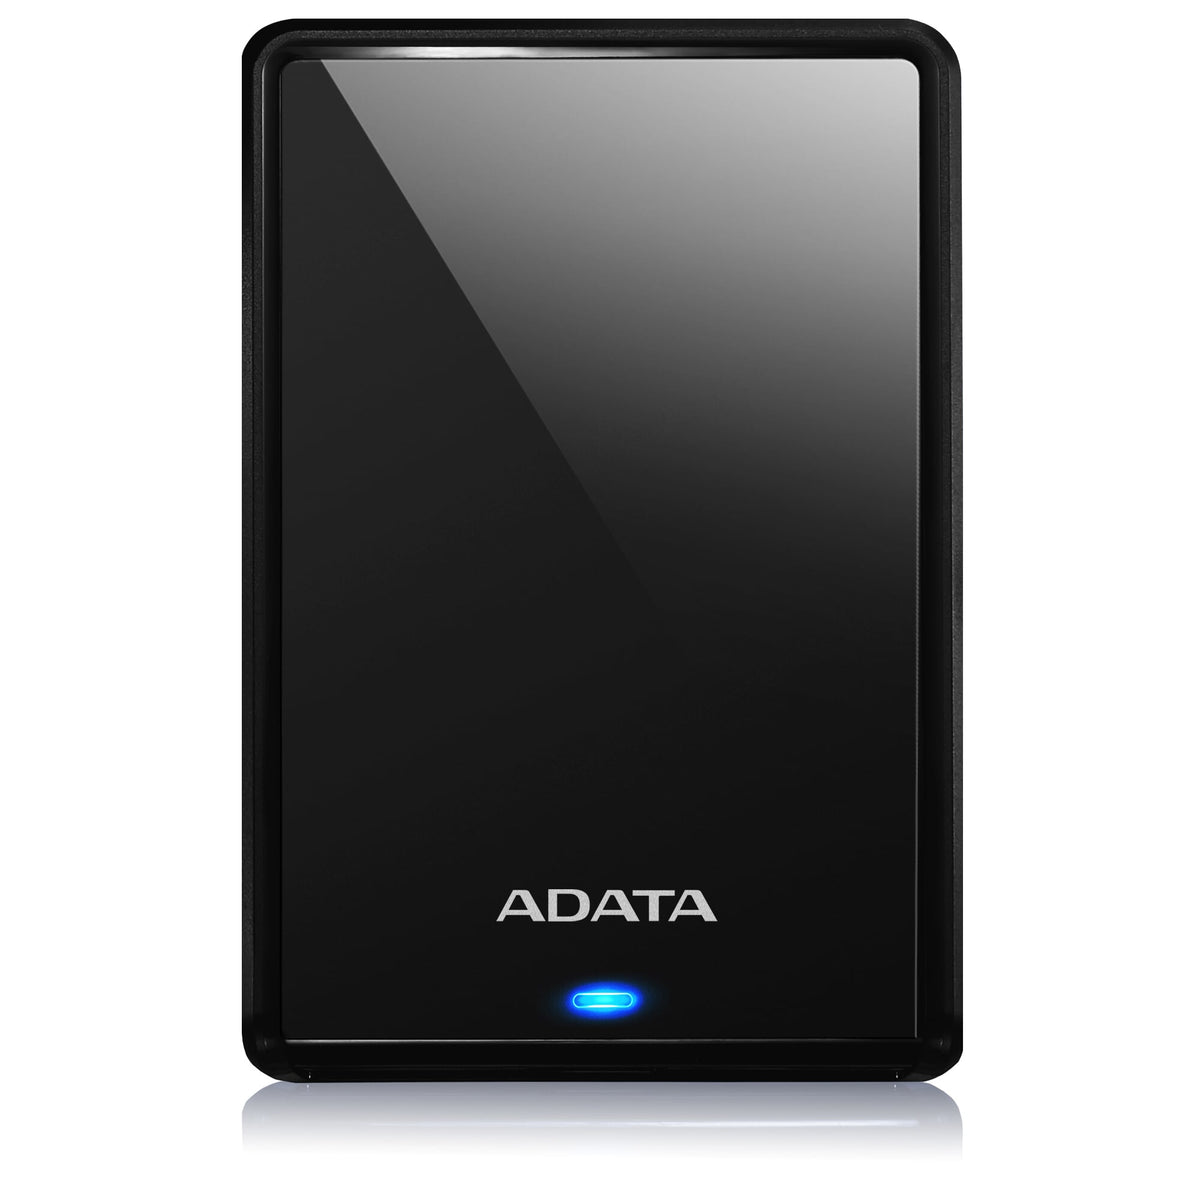 ADATA HV620S - External HDD in Black - 4 TB